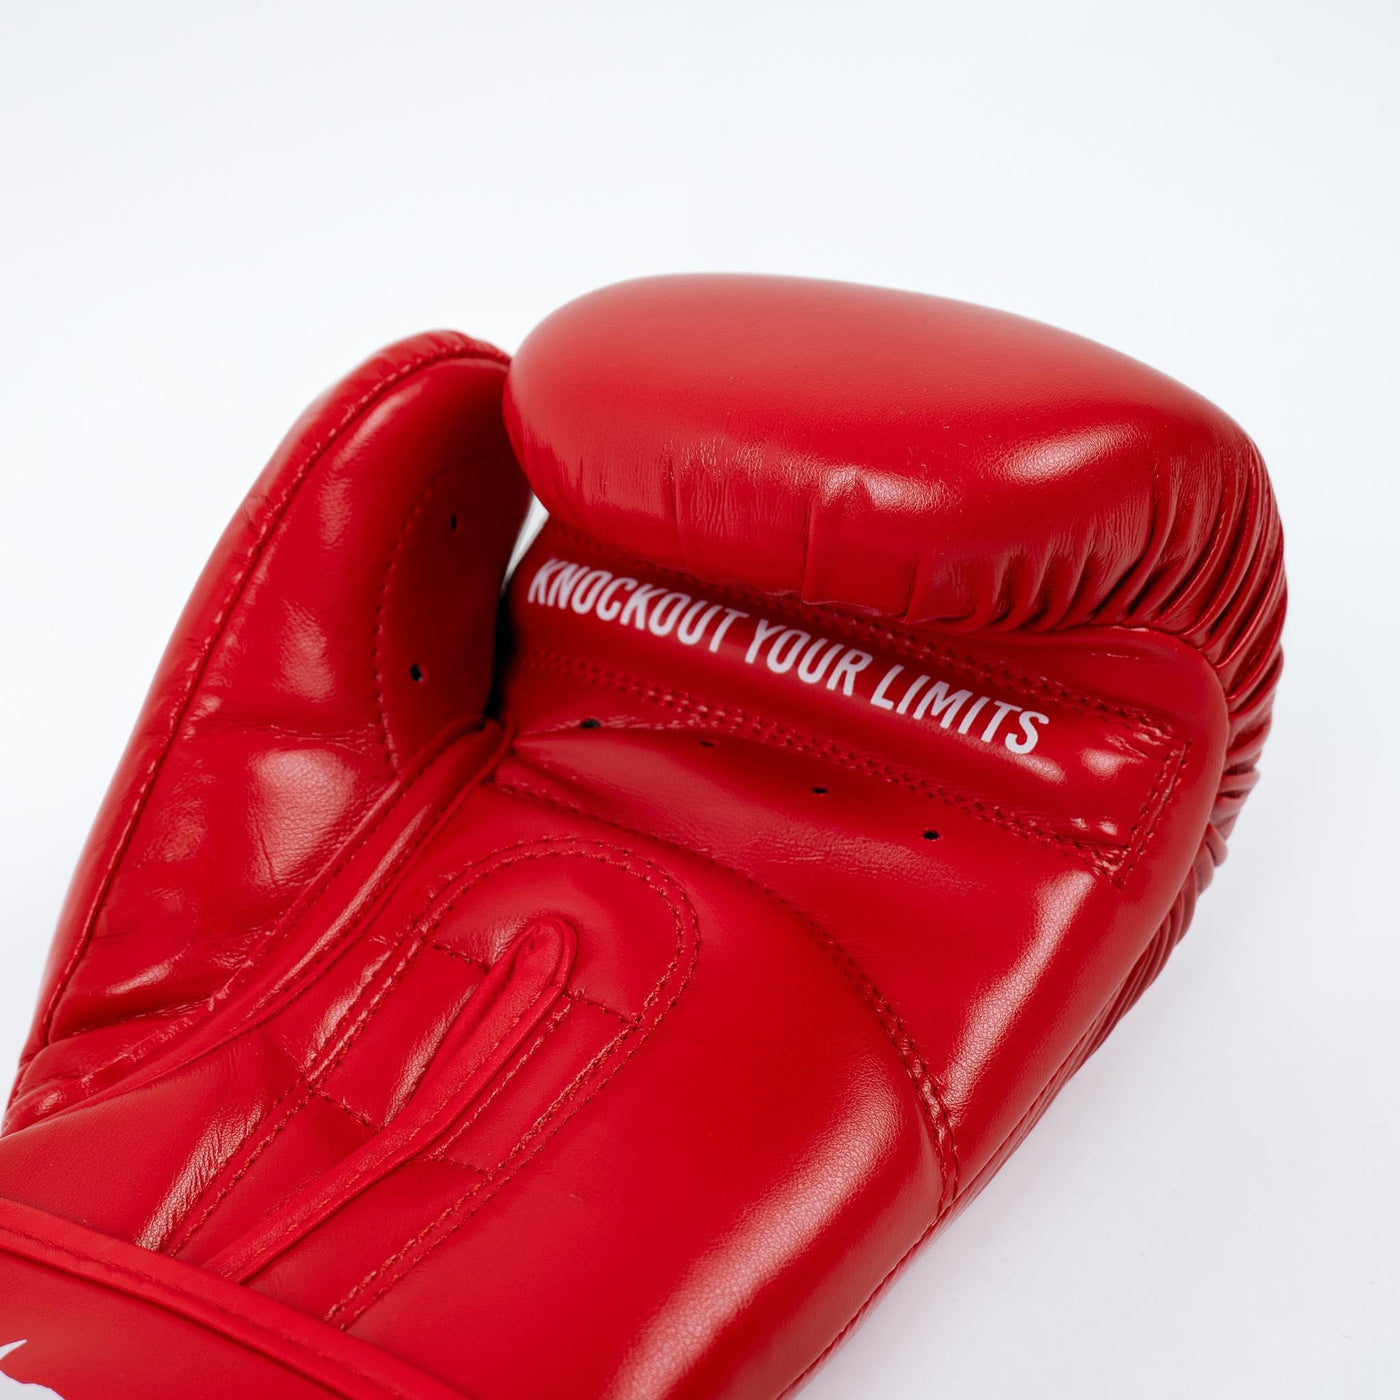 Mănuși de Box Knockout Kempo | knock-out.ro